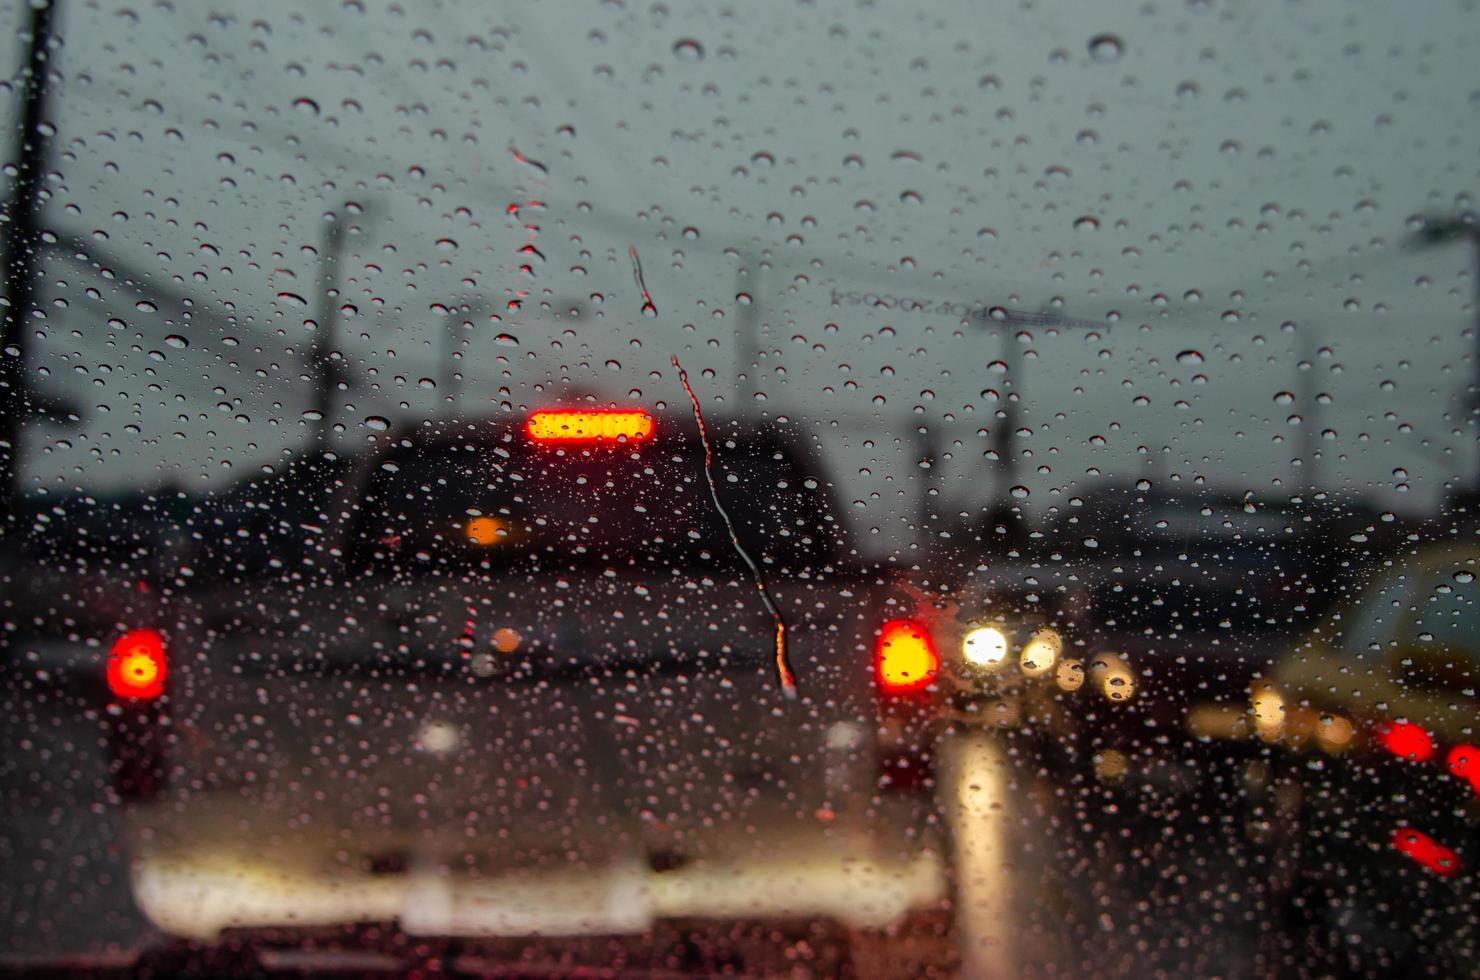 Rain on car window in the evening photo